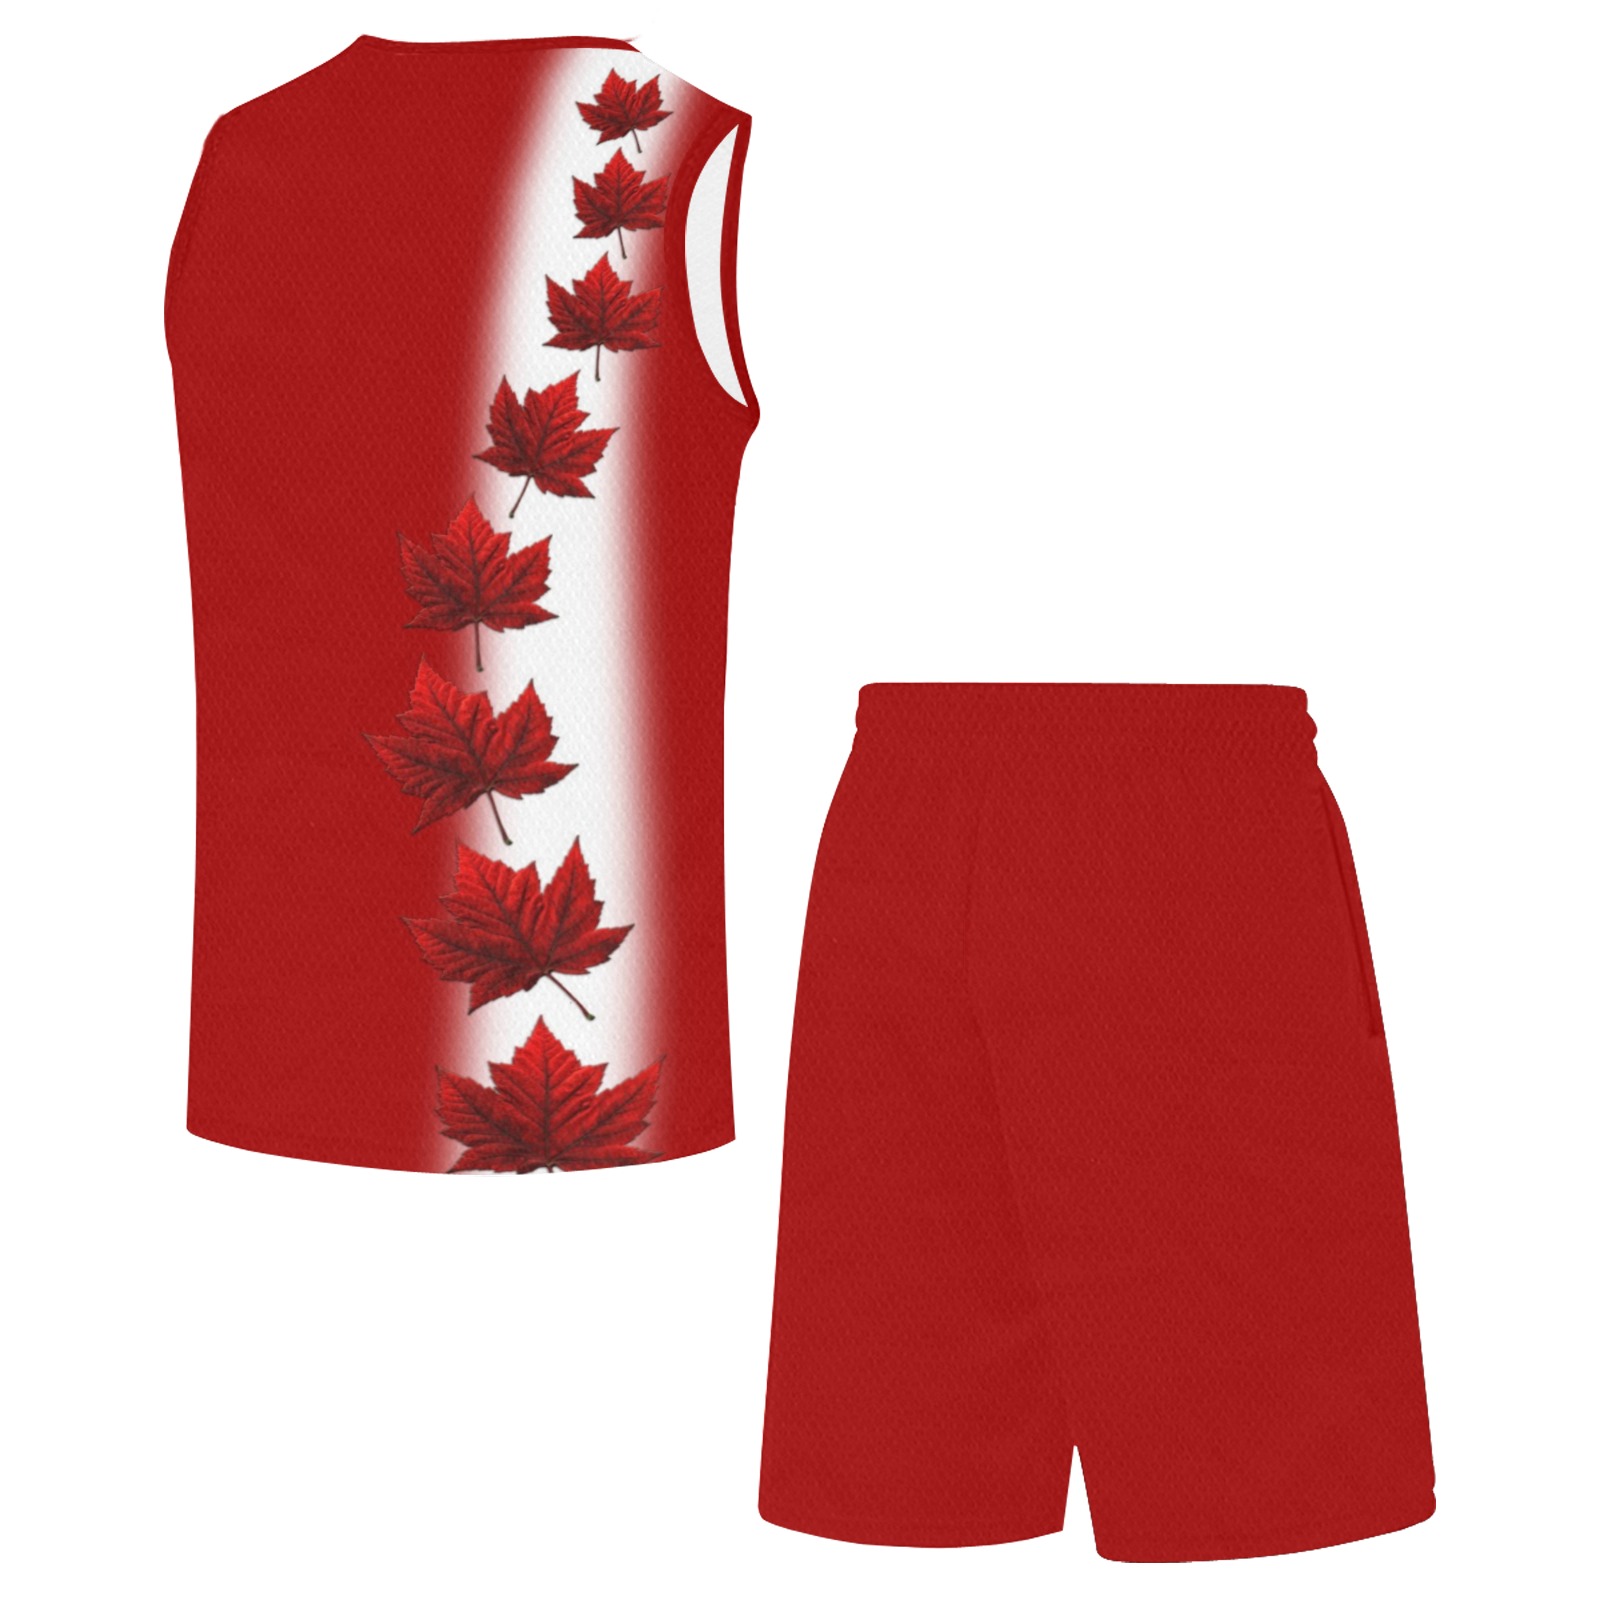 Canada Basketball Team Uniforms Basketball Uniform with Pocket